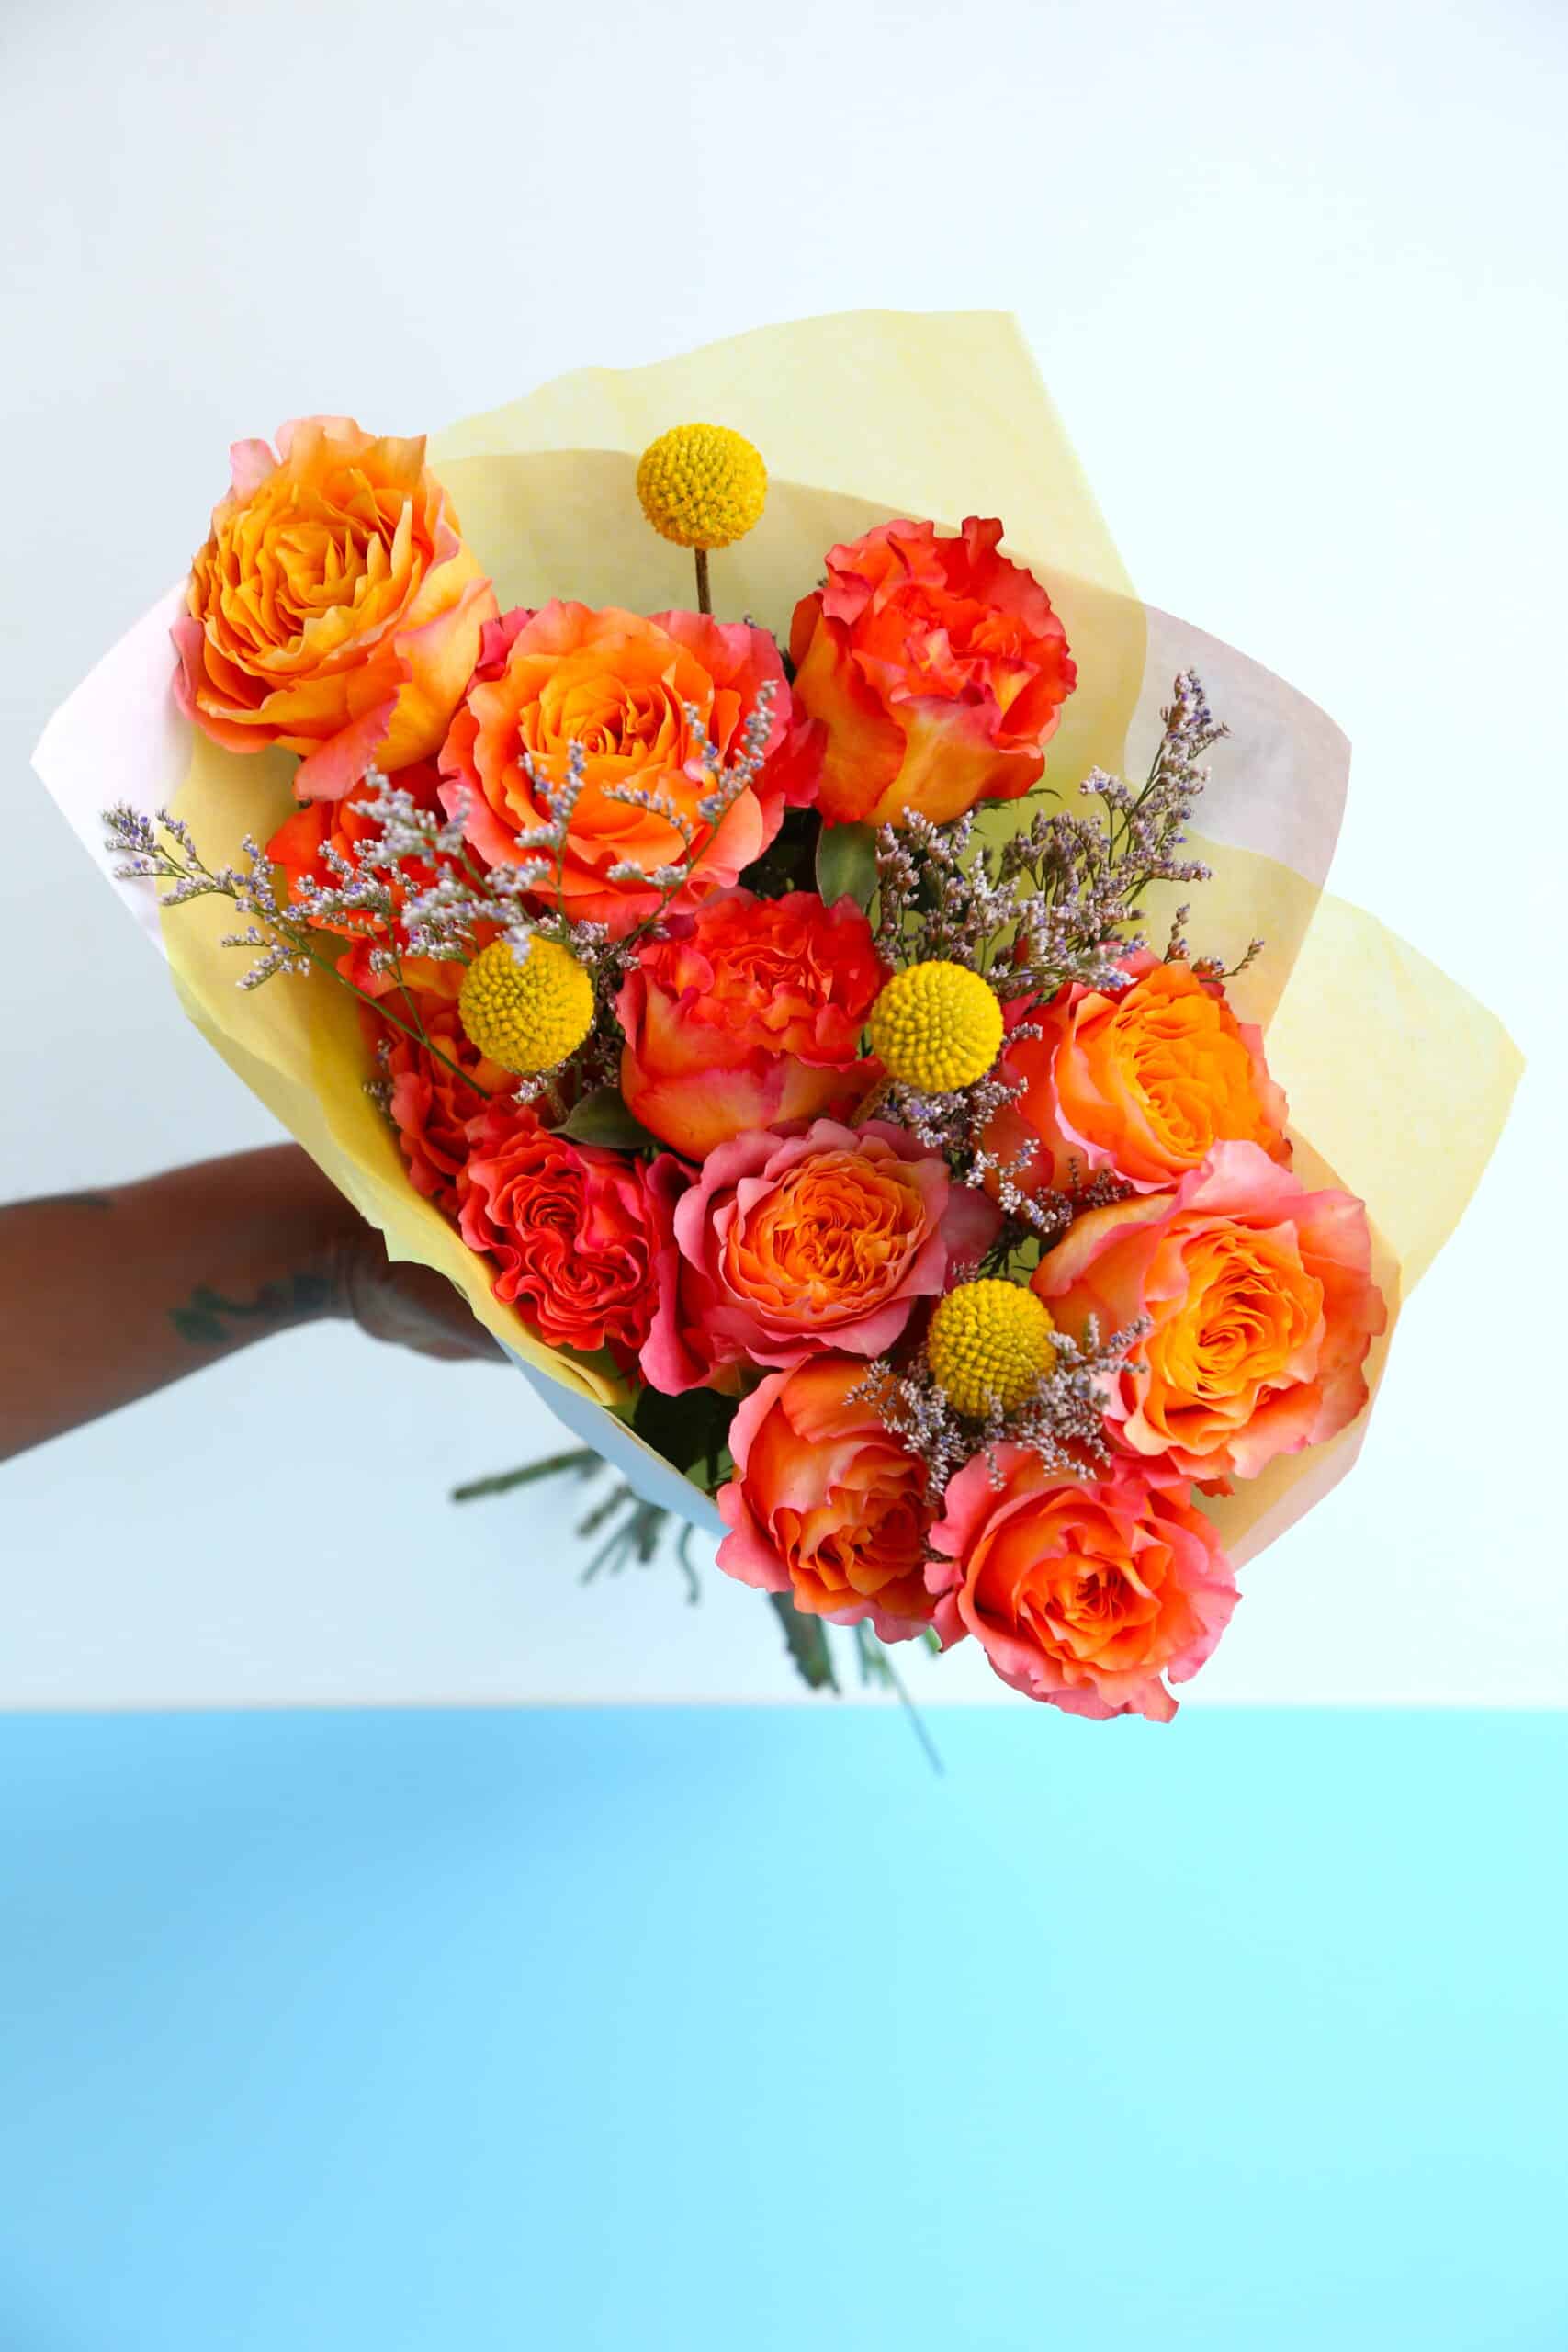 UrbanStems Floral Shears » Send Flower Bouquets